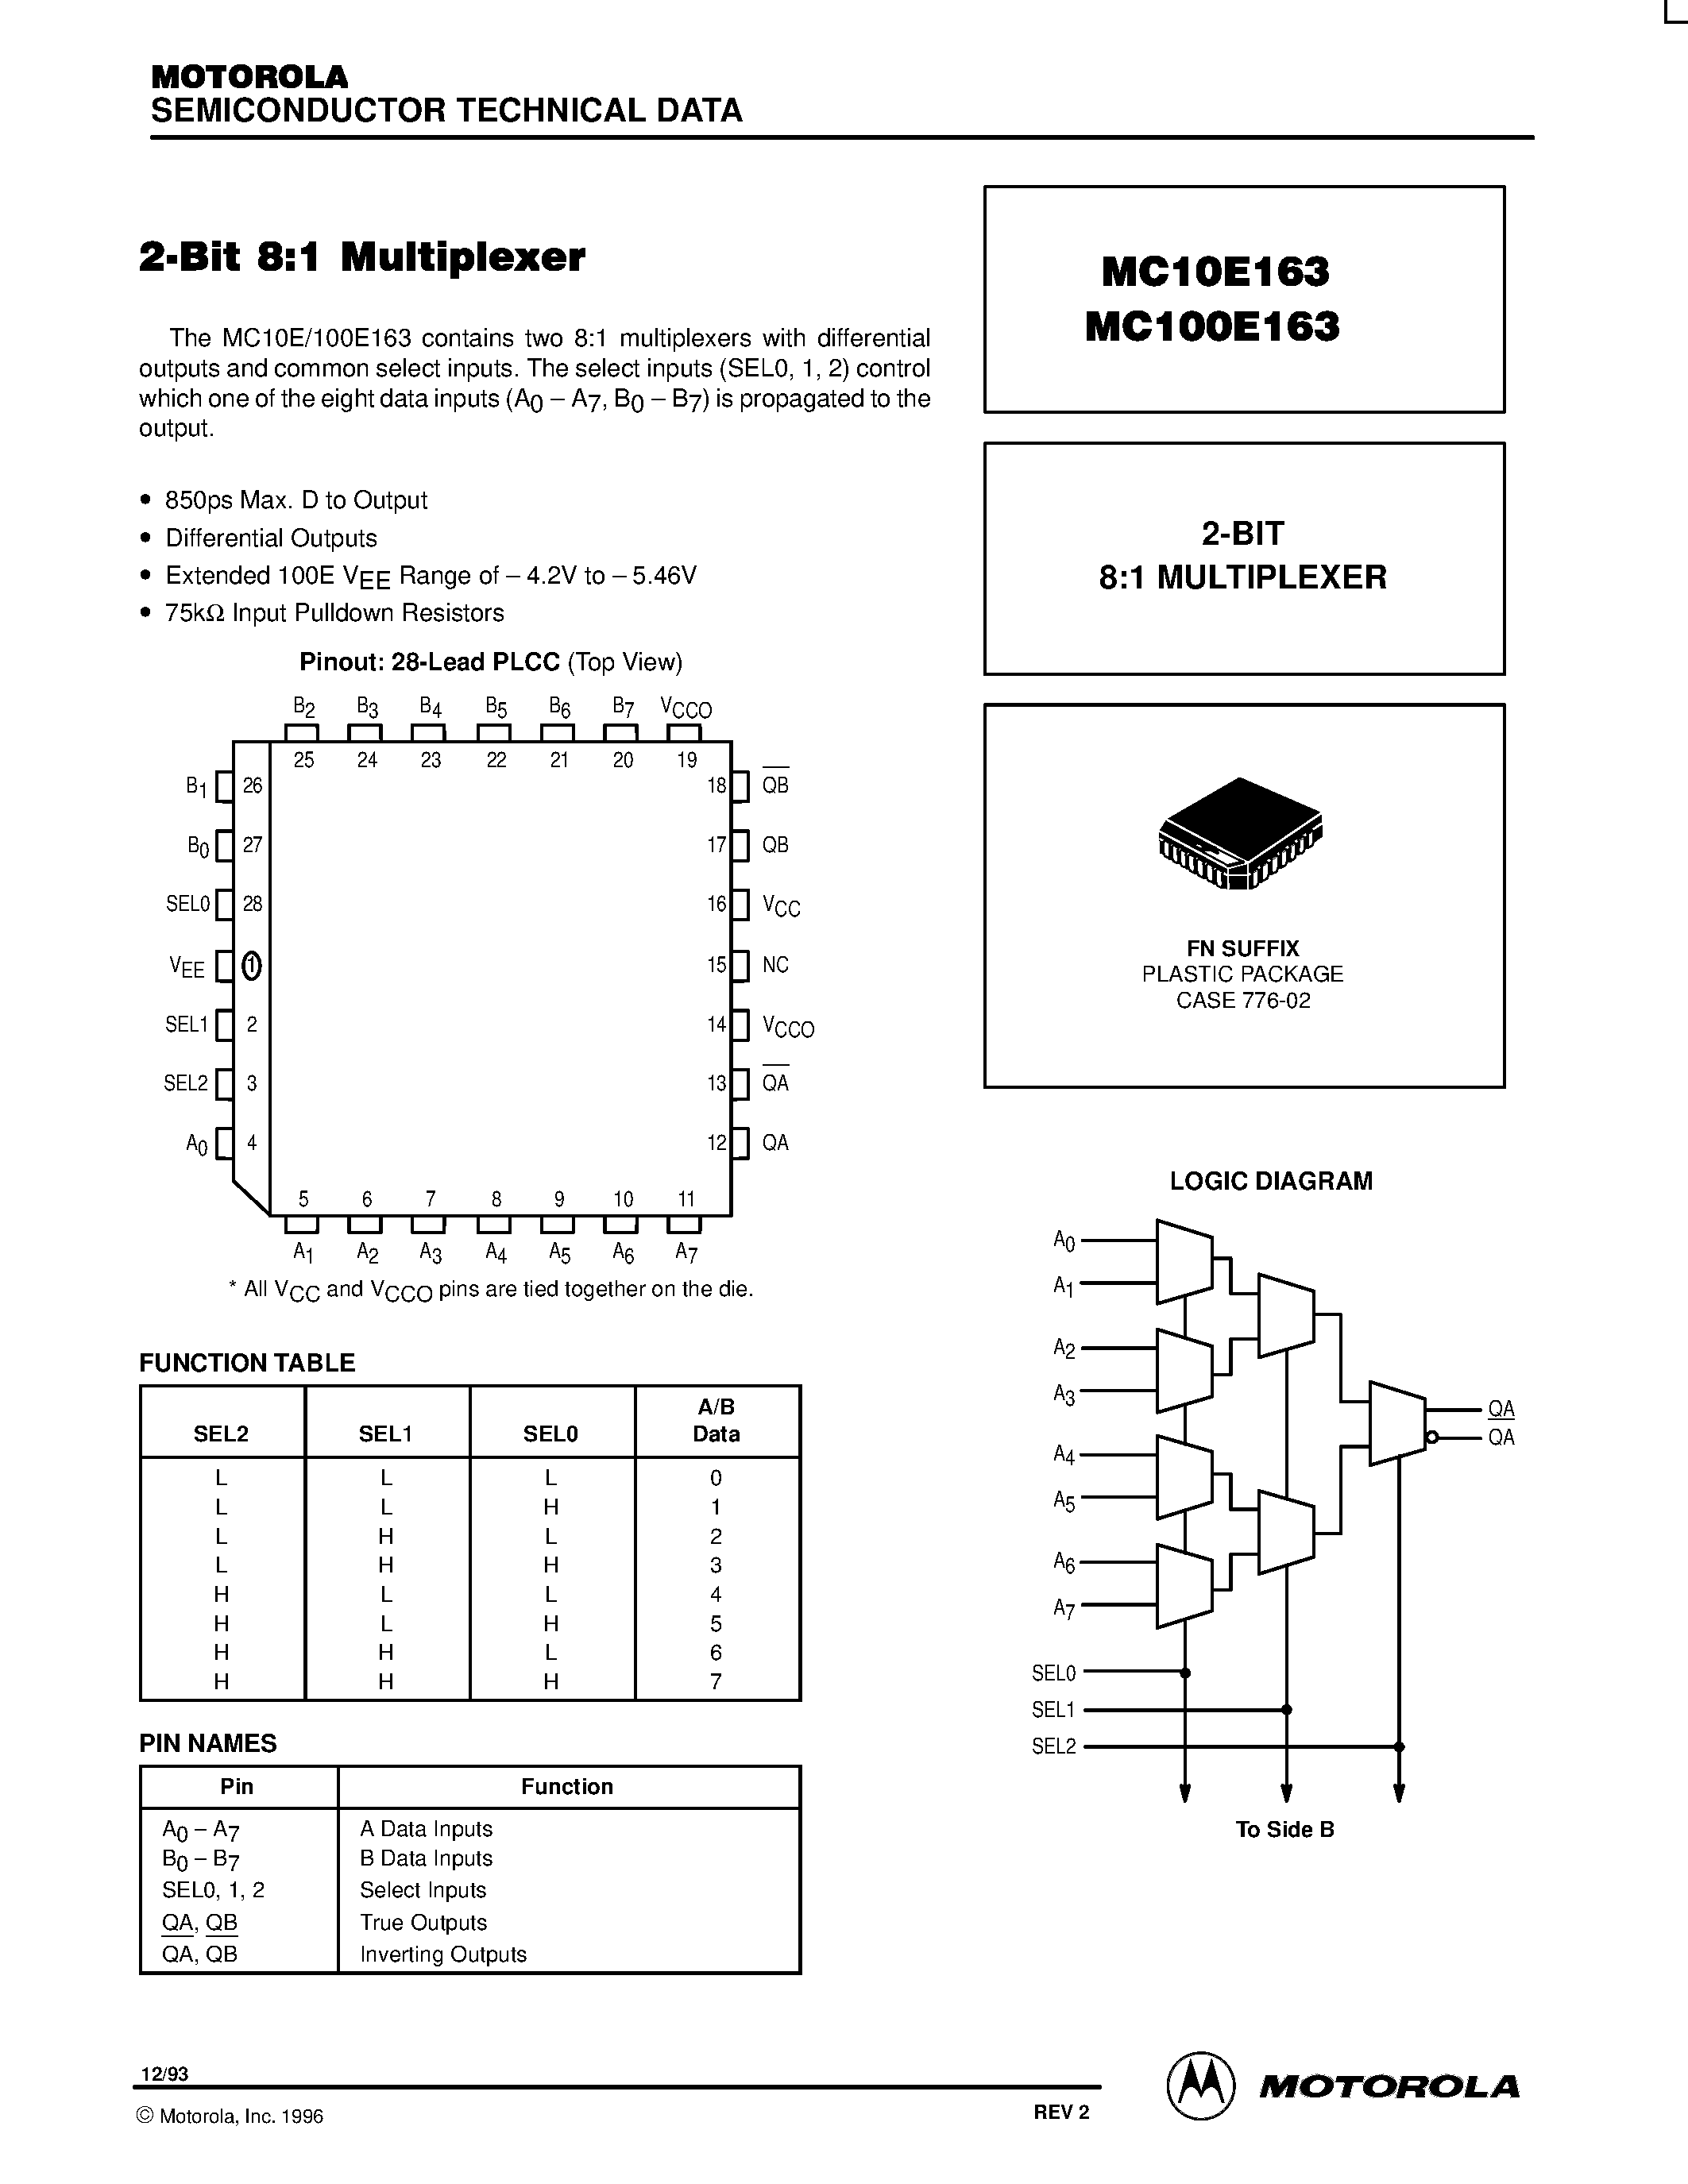 Datasheet MC100E163 - 2-Bit 8:1 Multiplexer page 1